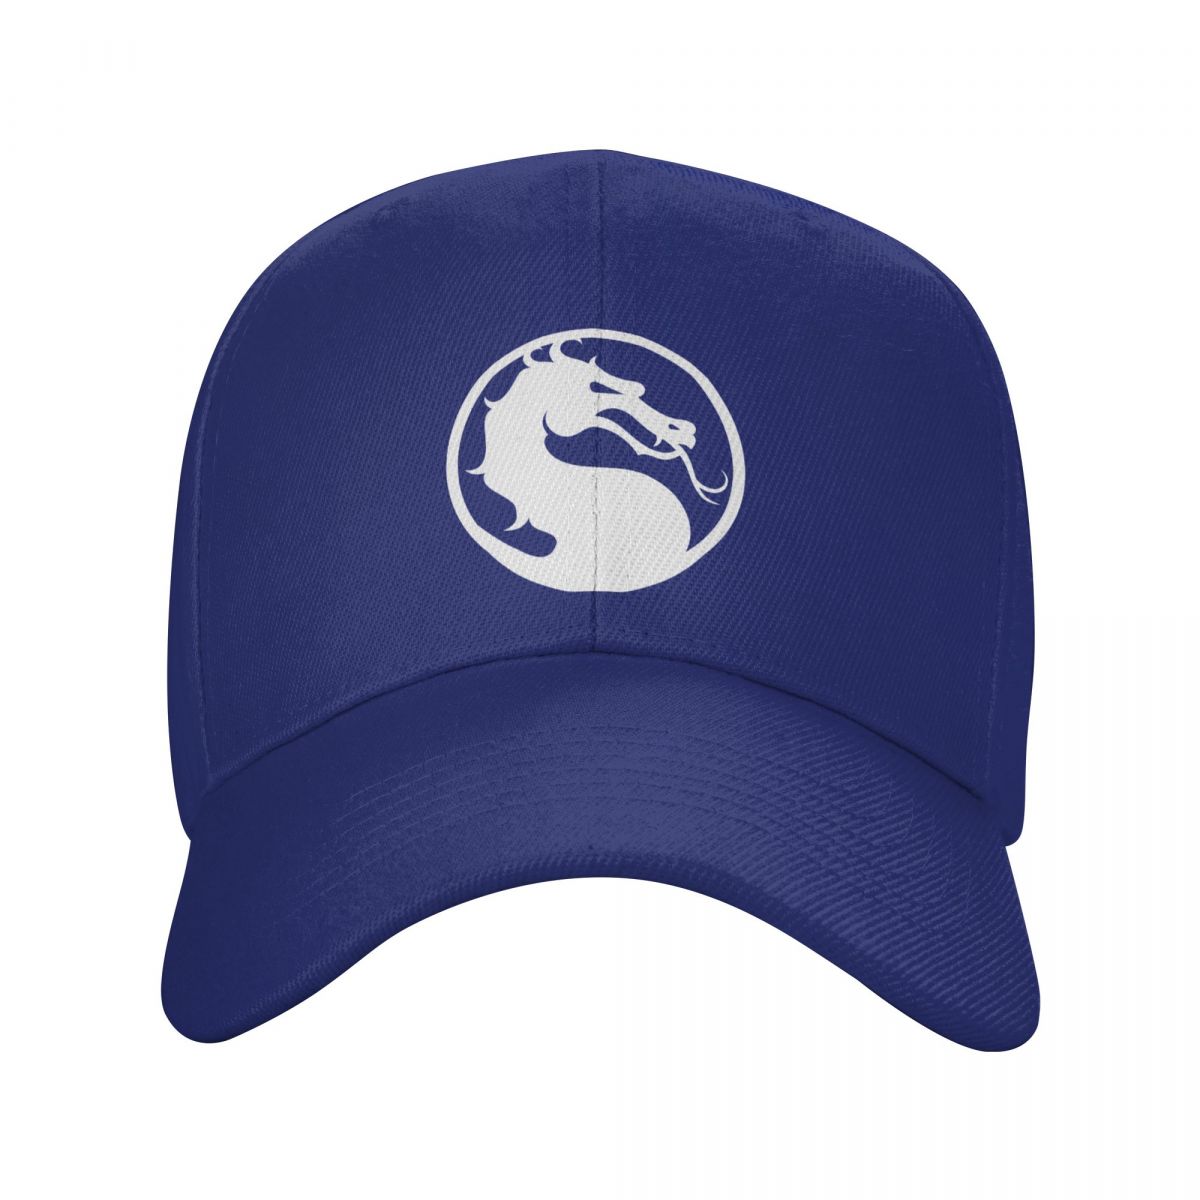 Mortal Kombat - Snapback Baseball Cap - Summer Hat For Men and Women-Blue-Adjustable Cap-